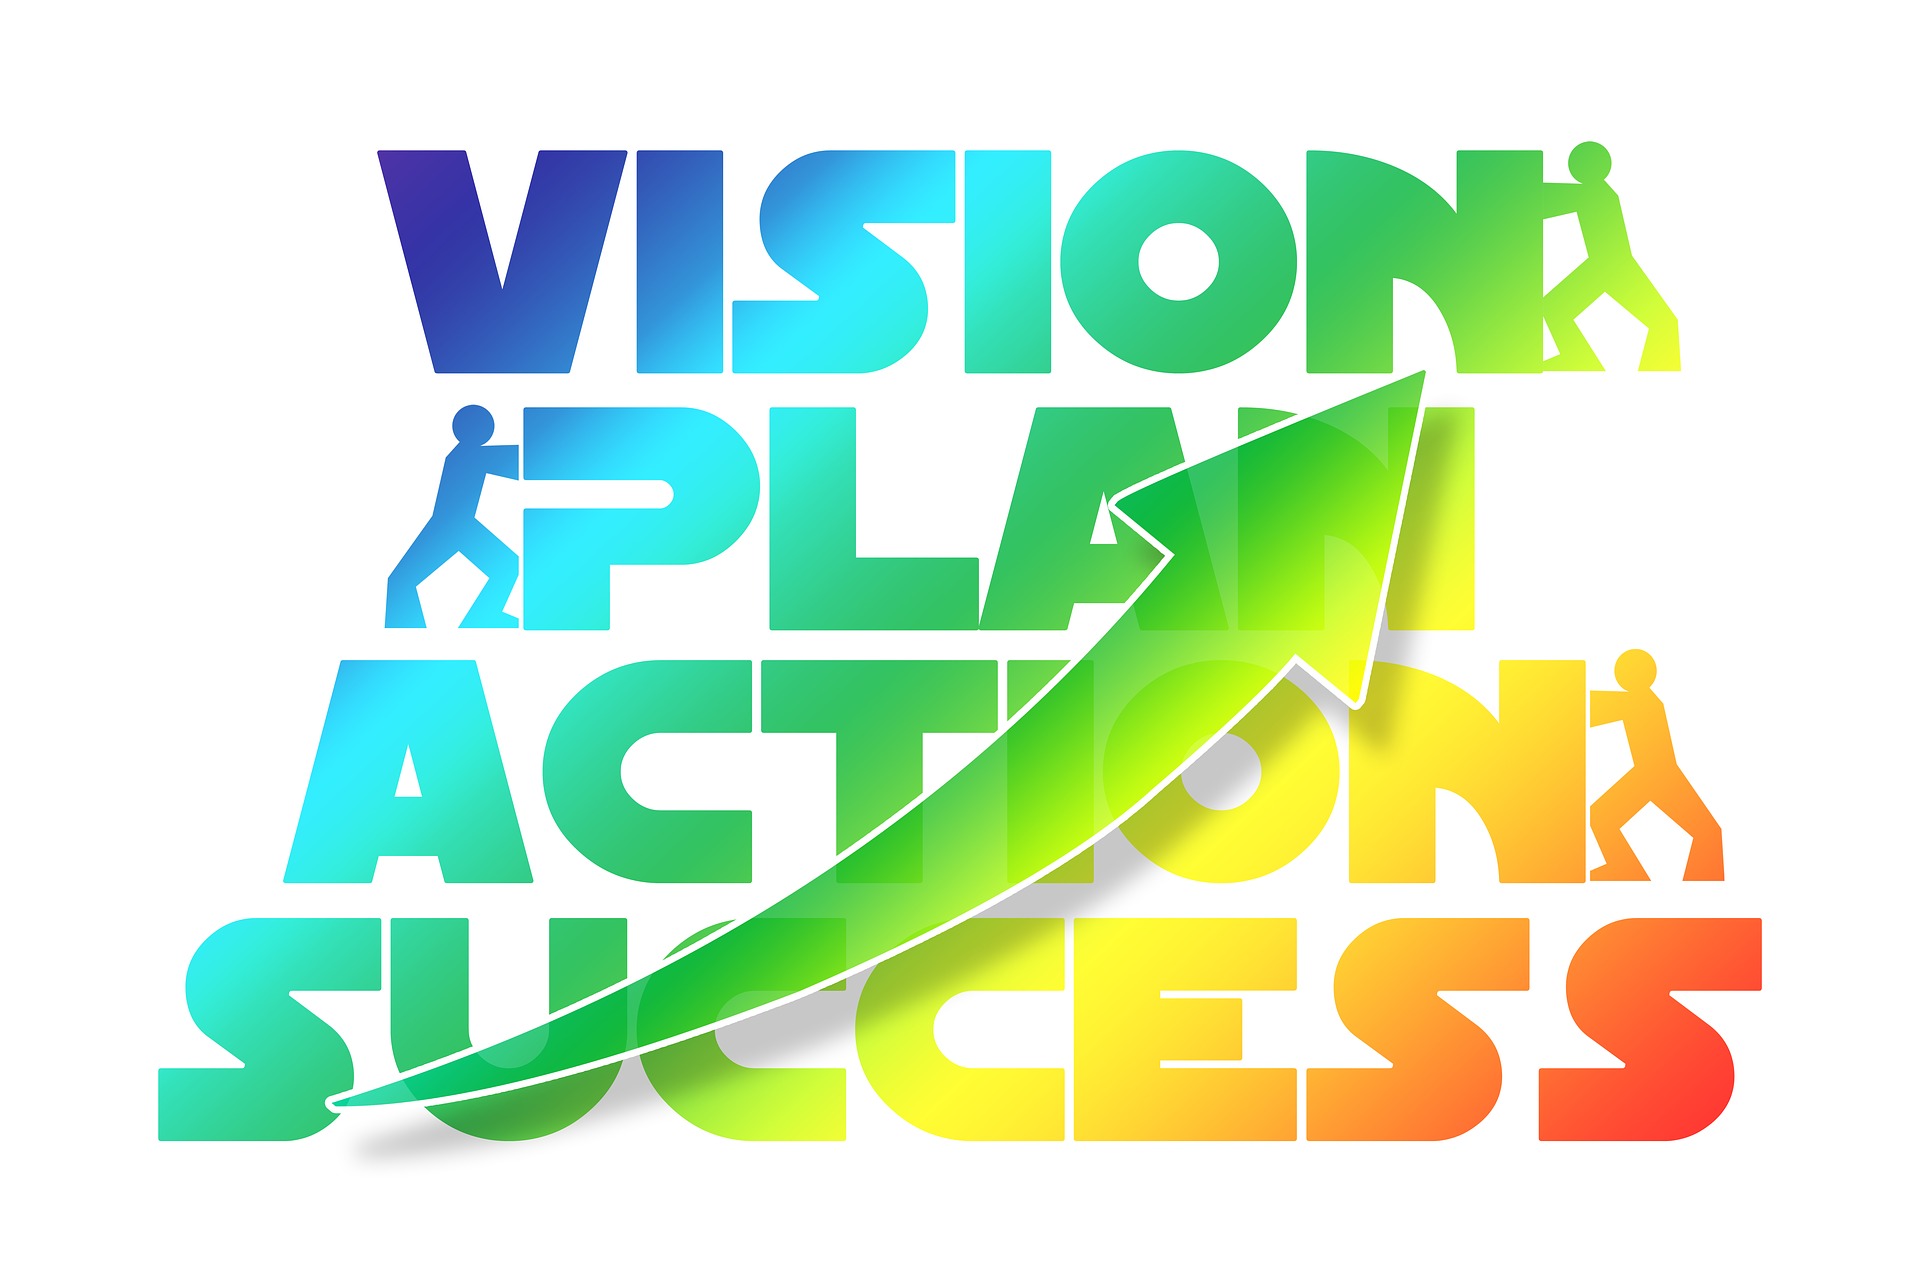 "Vision, plan, action, success"